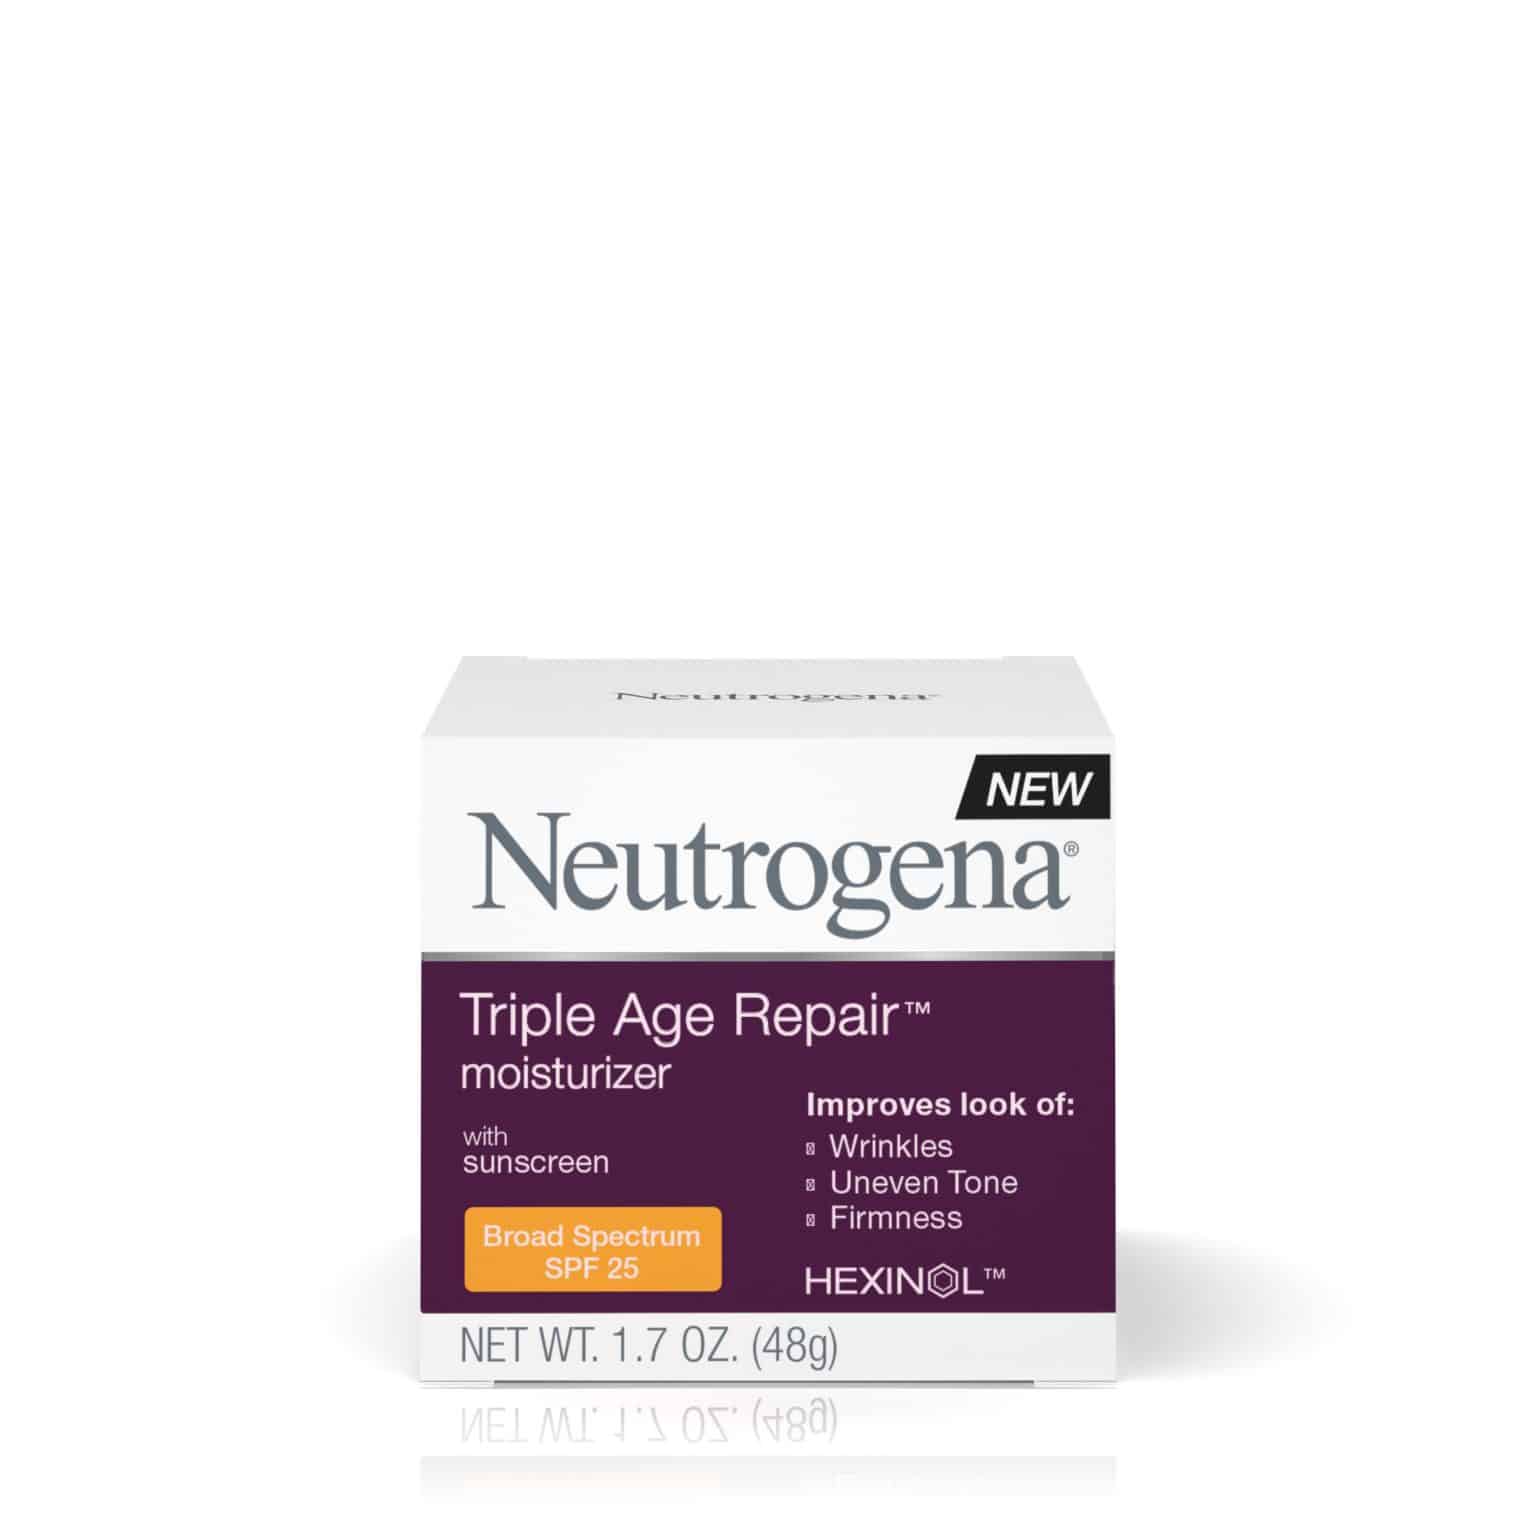 Save 3.00 off (1) Neutrogena Triple Age Repair Printable Coupon